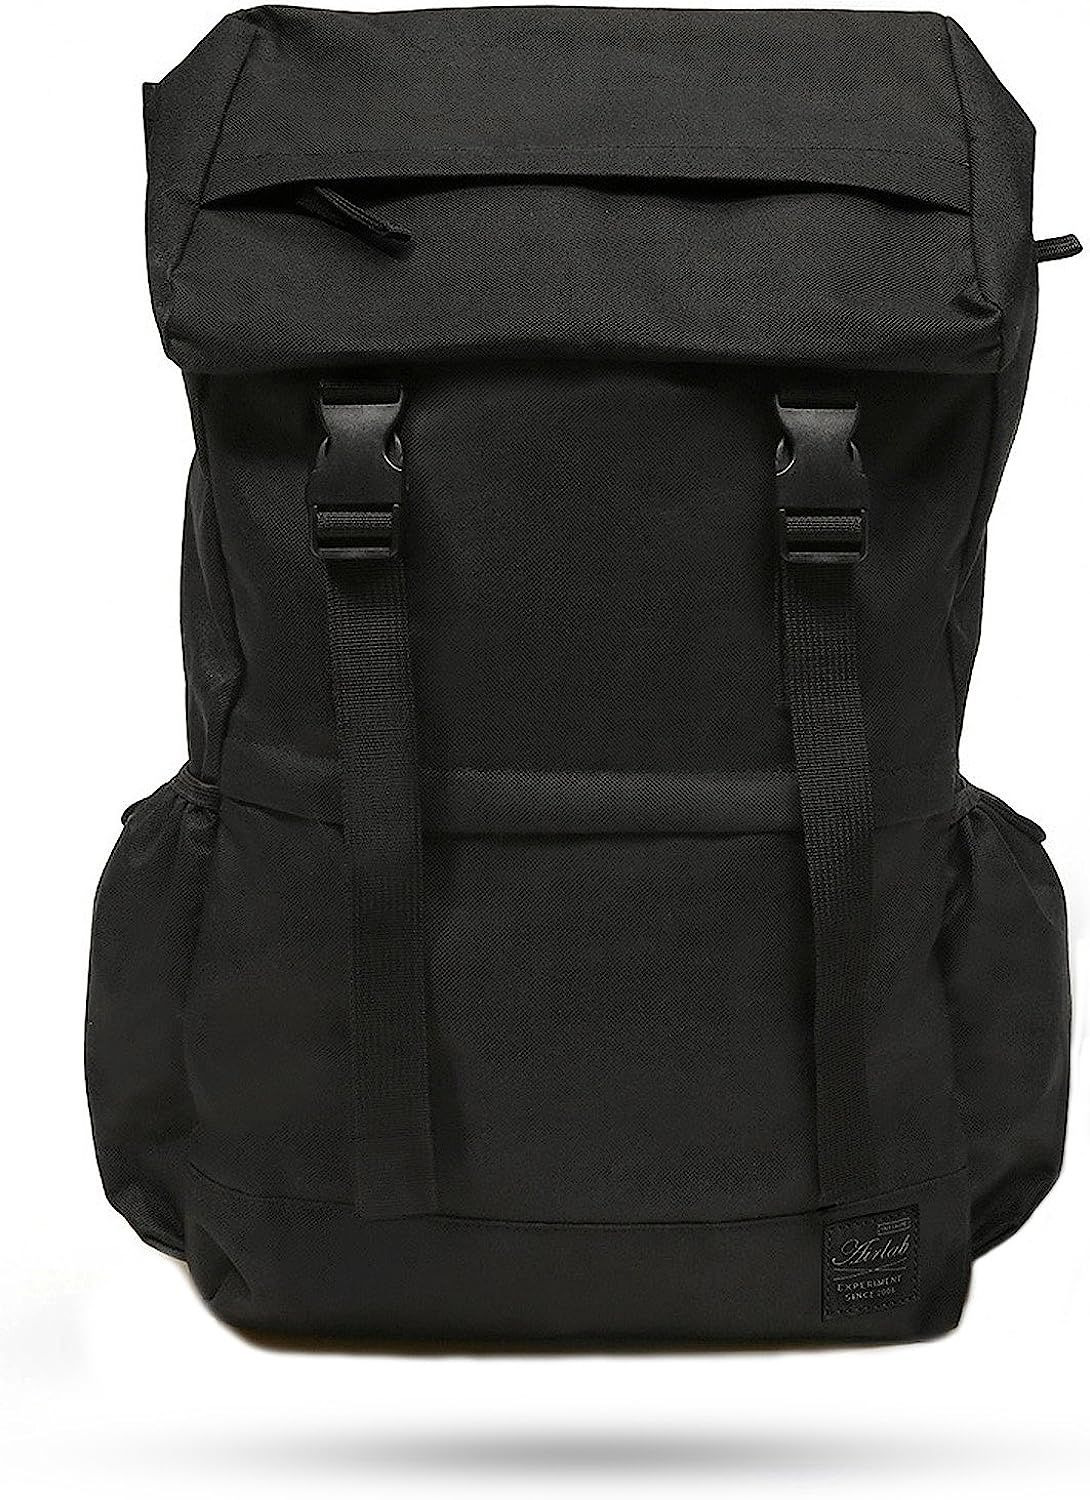 Rucksack Backpack for Travel College Hiking Camping Large Outdoor men Black 